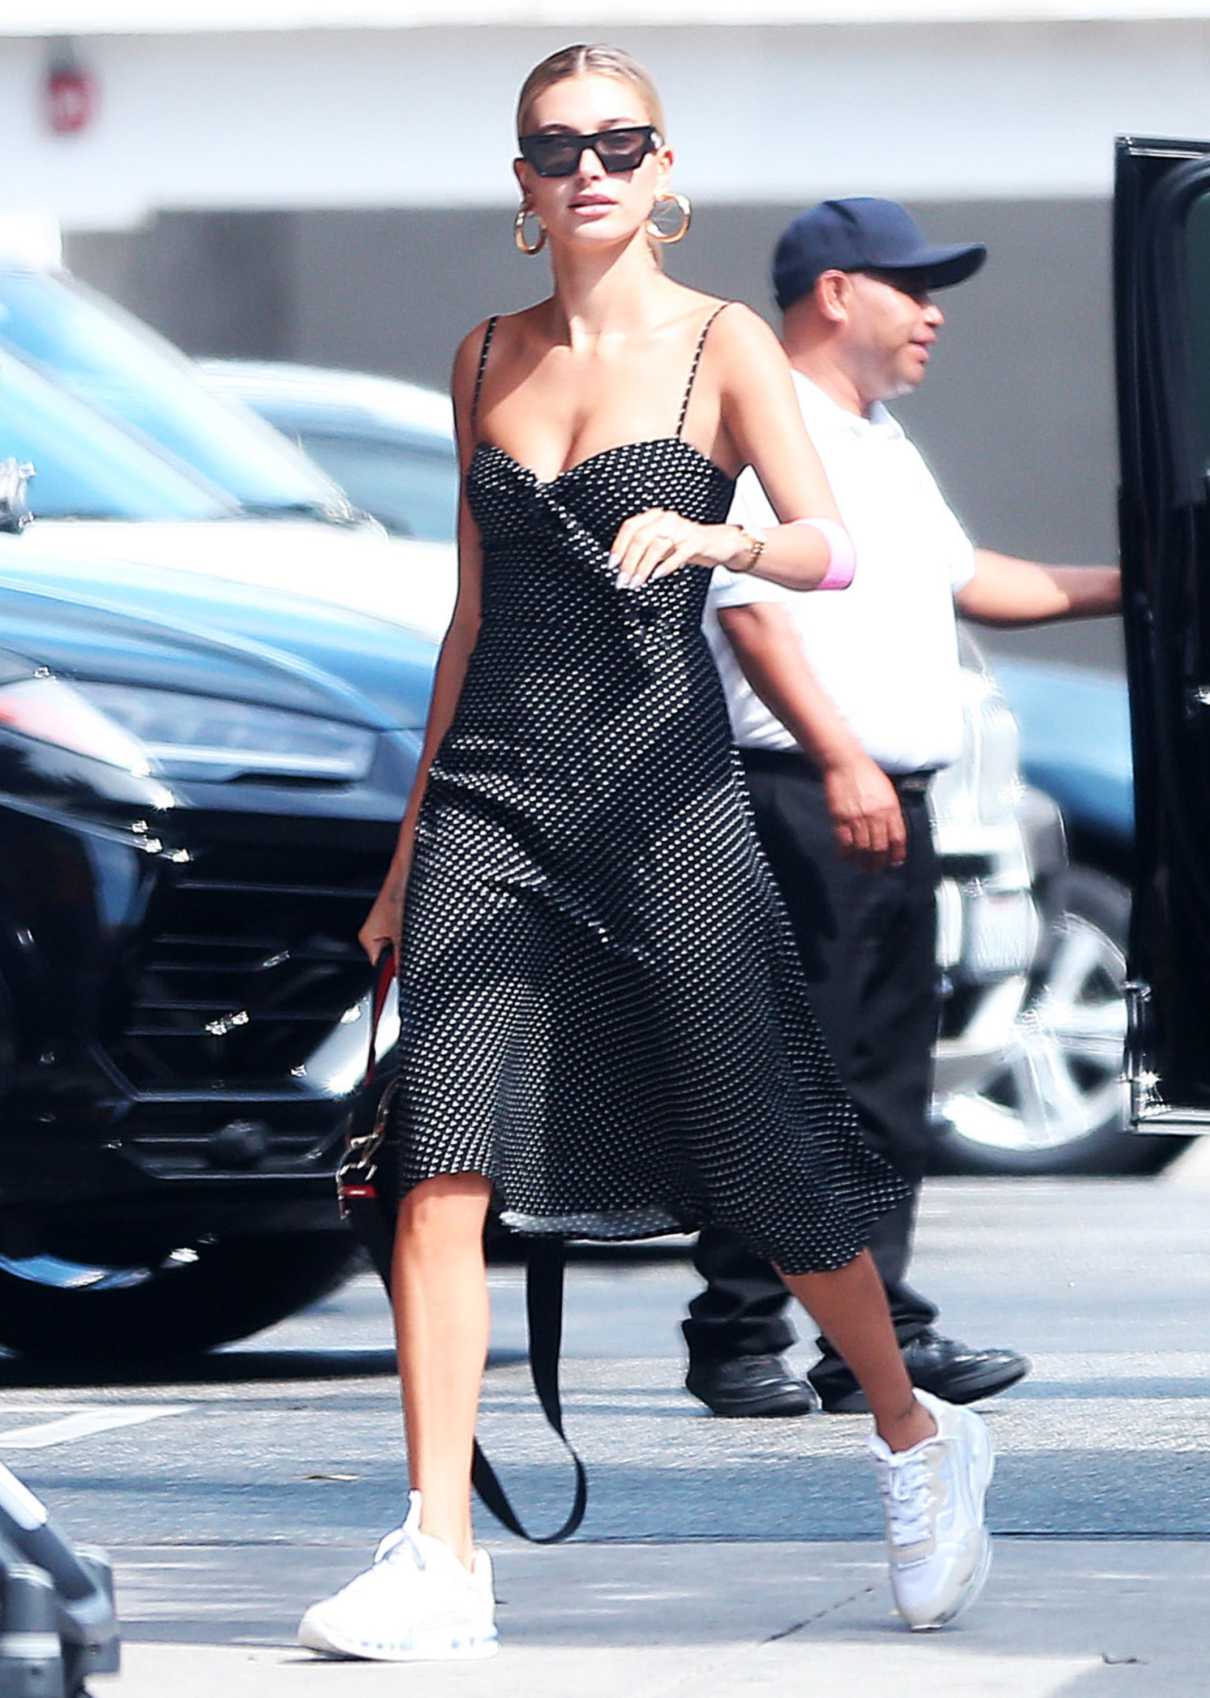 Hailey Baldwin In A Black Polka Dot Dress Was Seen Out In Los Angeles 09 25 2019 Lacelebs Co